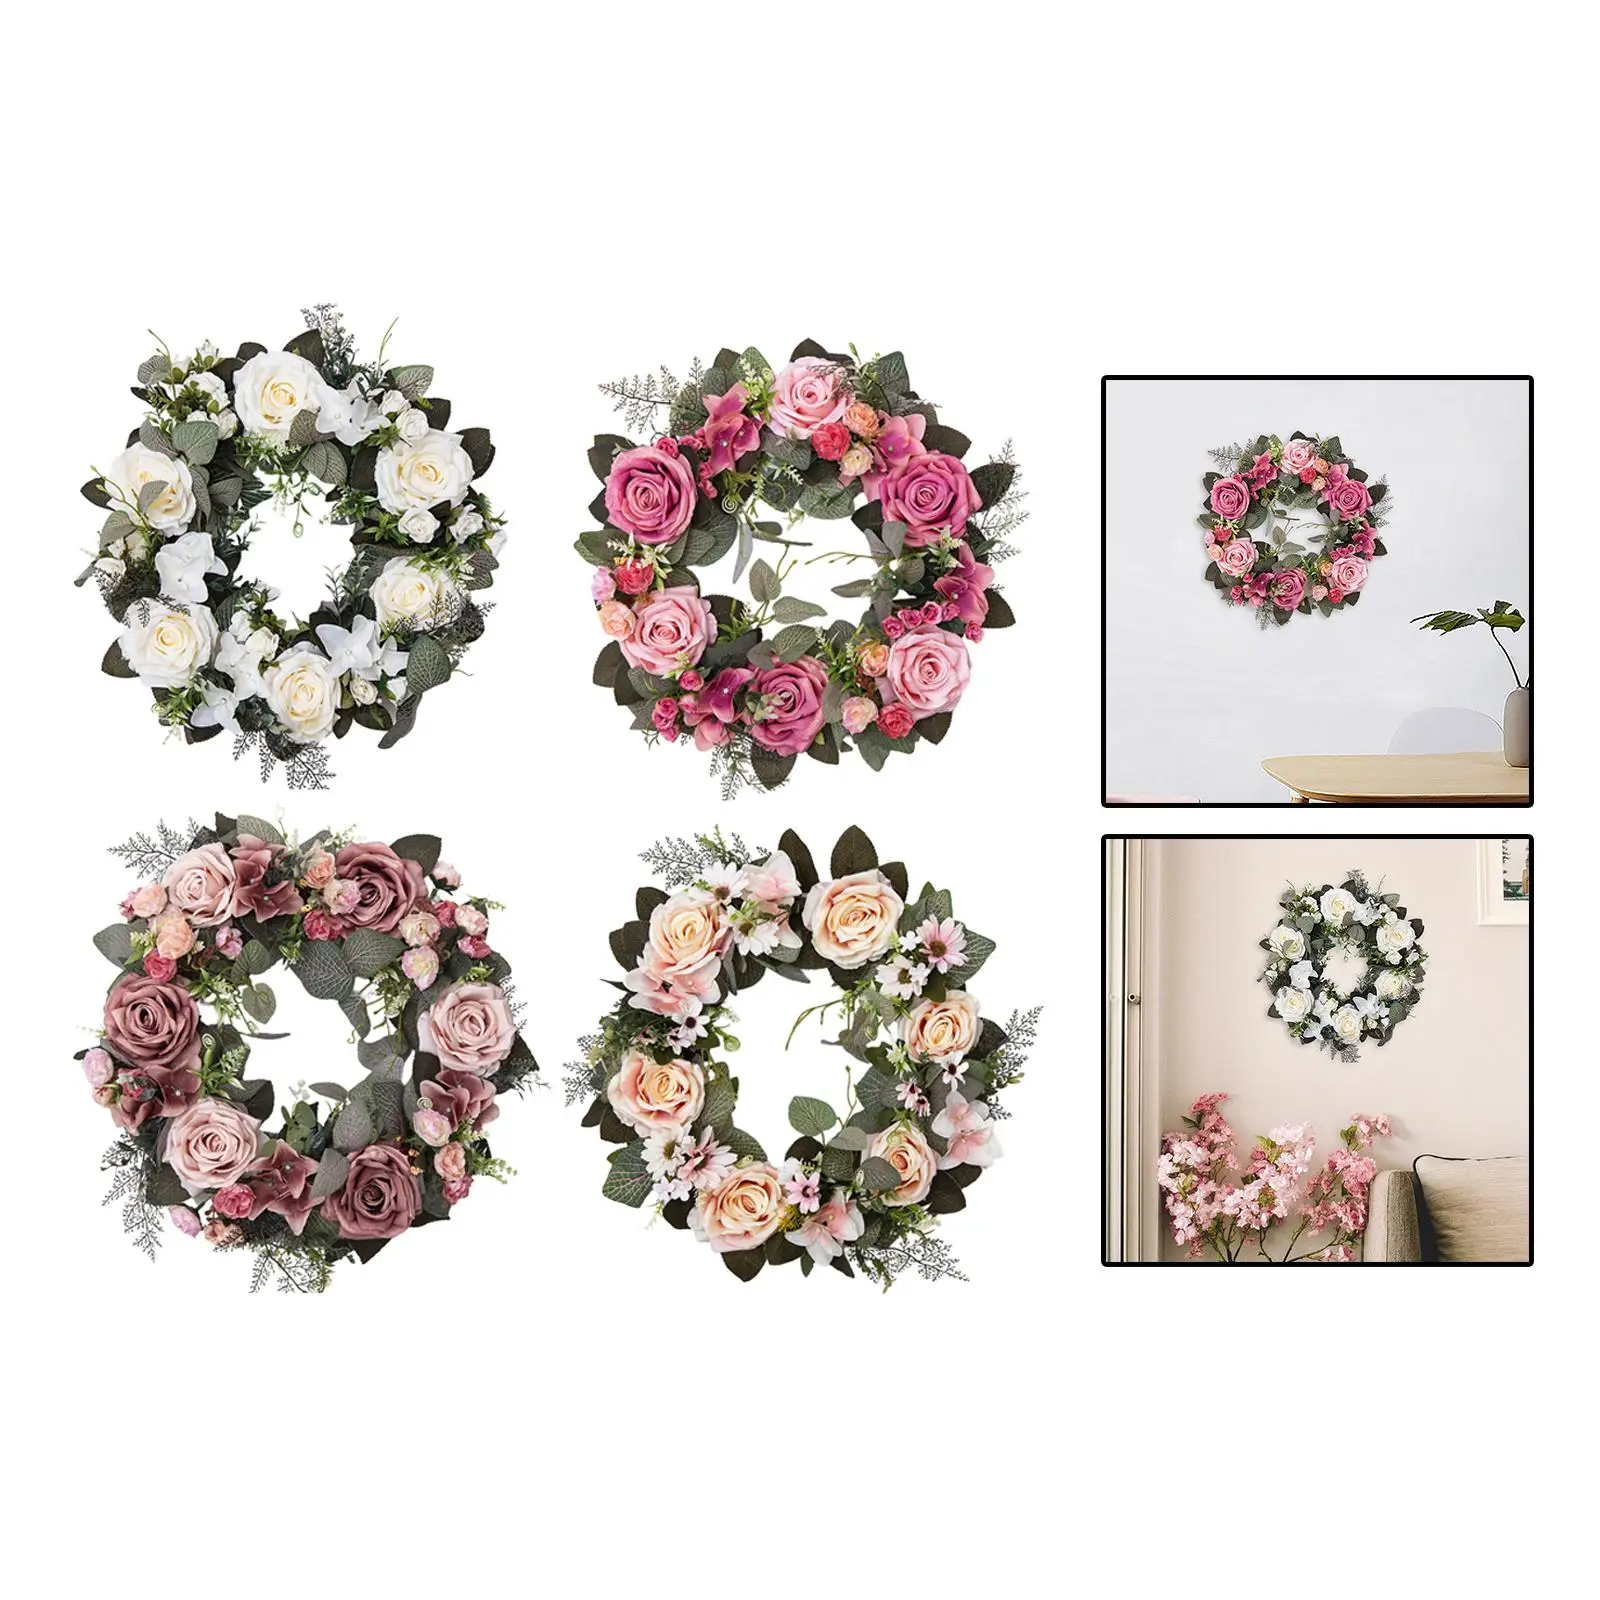 Handmade Artificial Wreath Floral Swag Flower Wreath for Home Decor